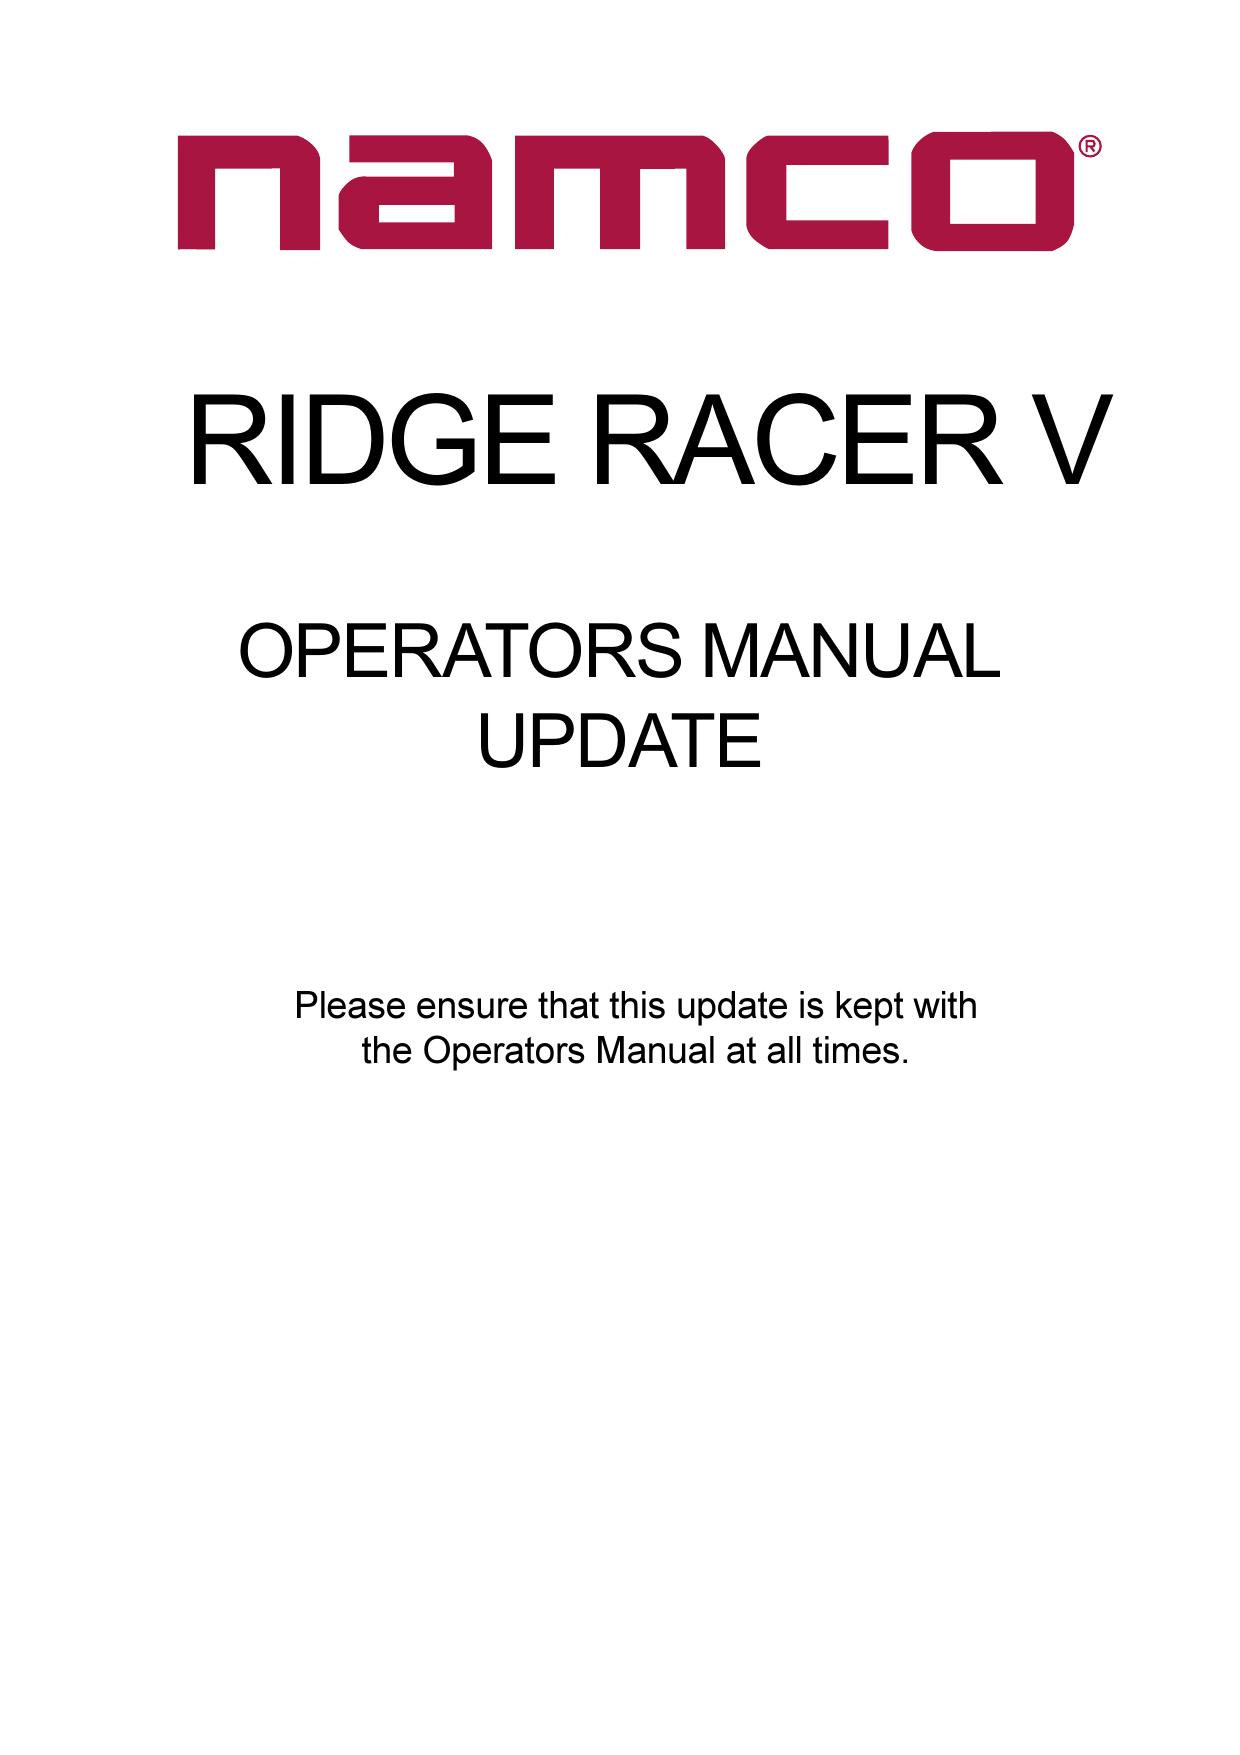 Operators Manual Update